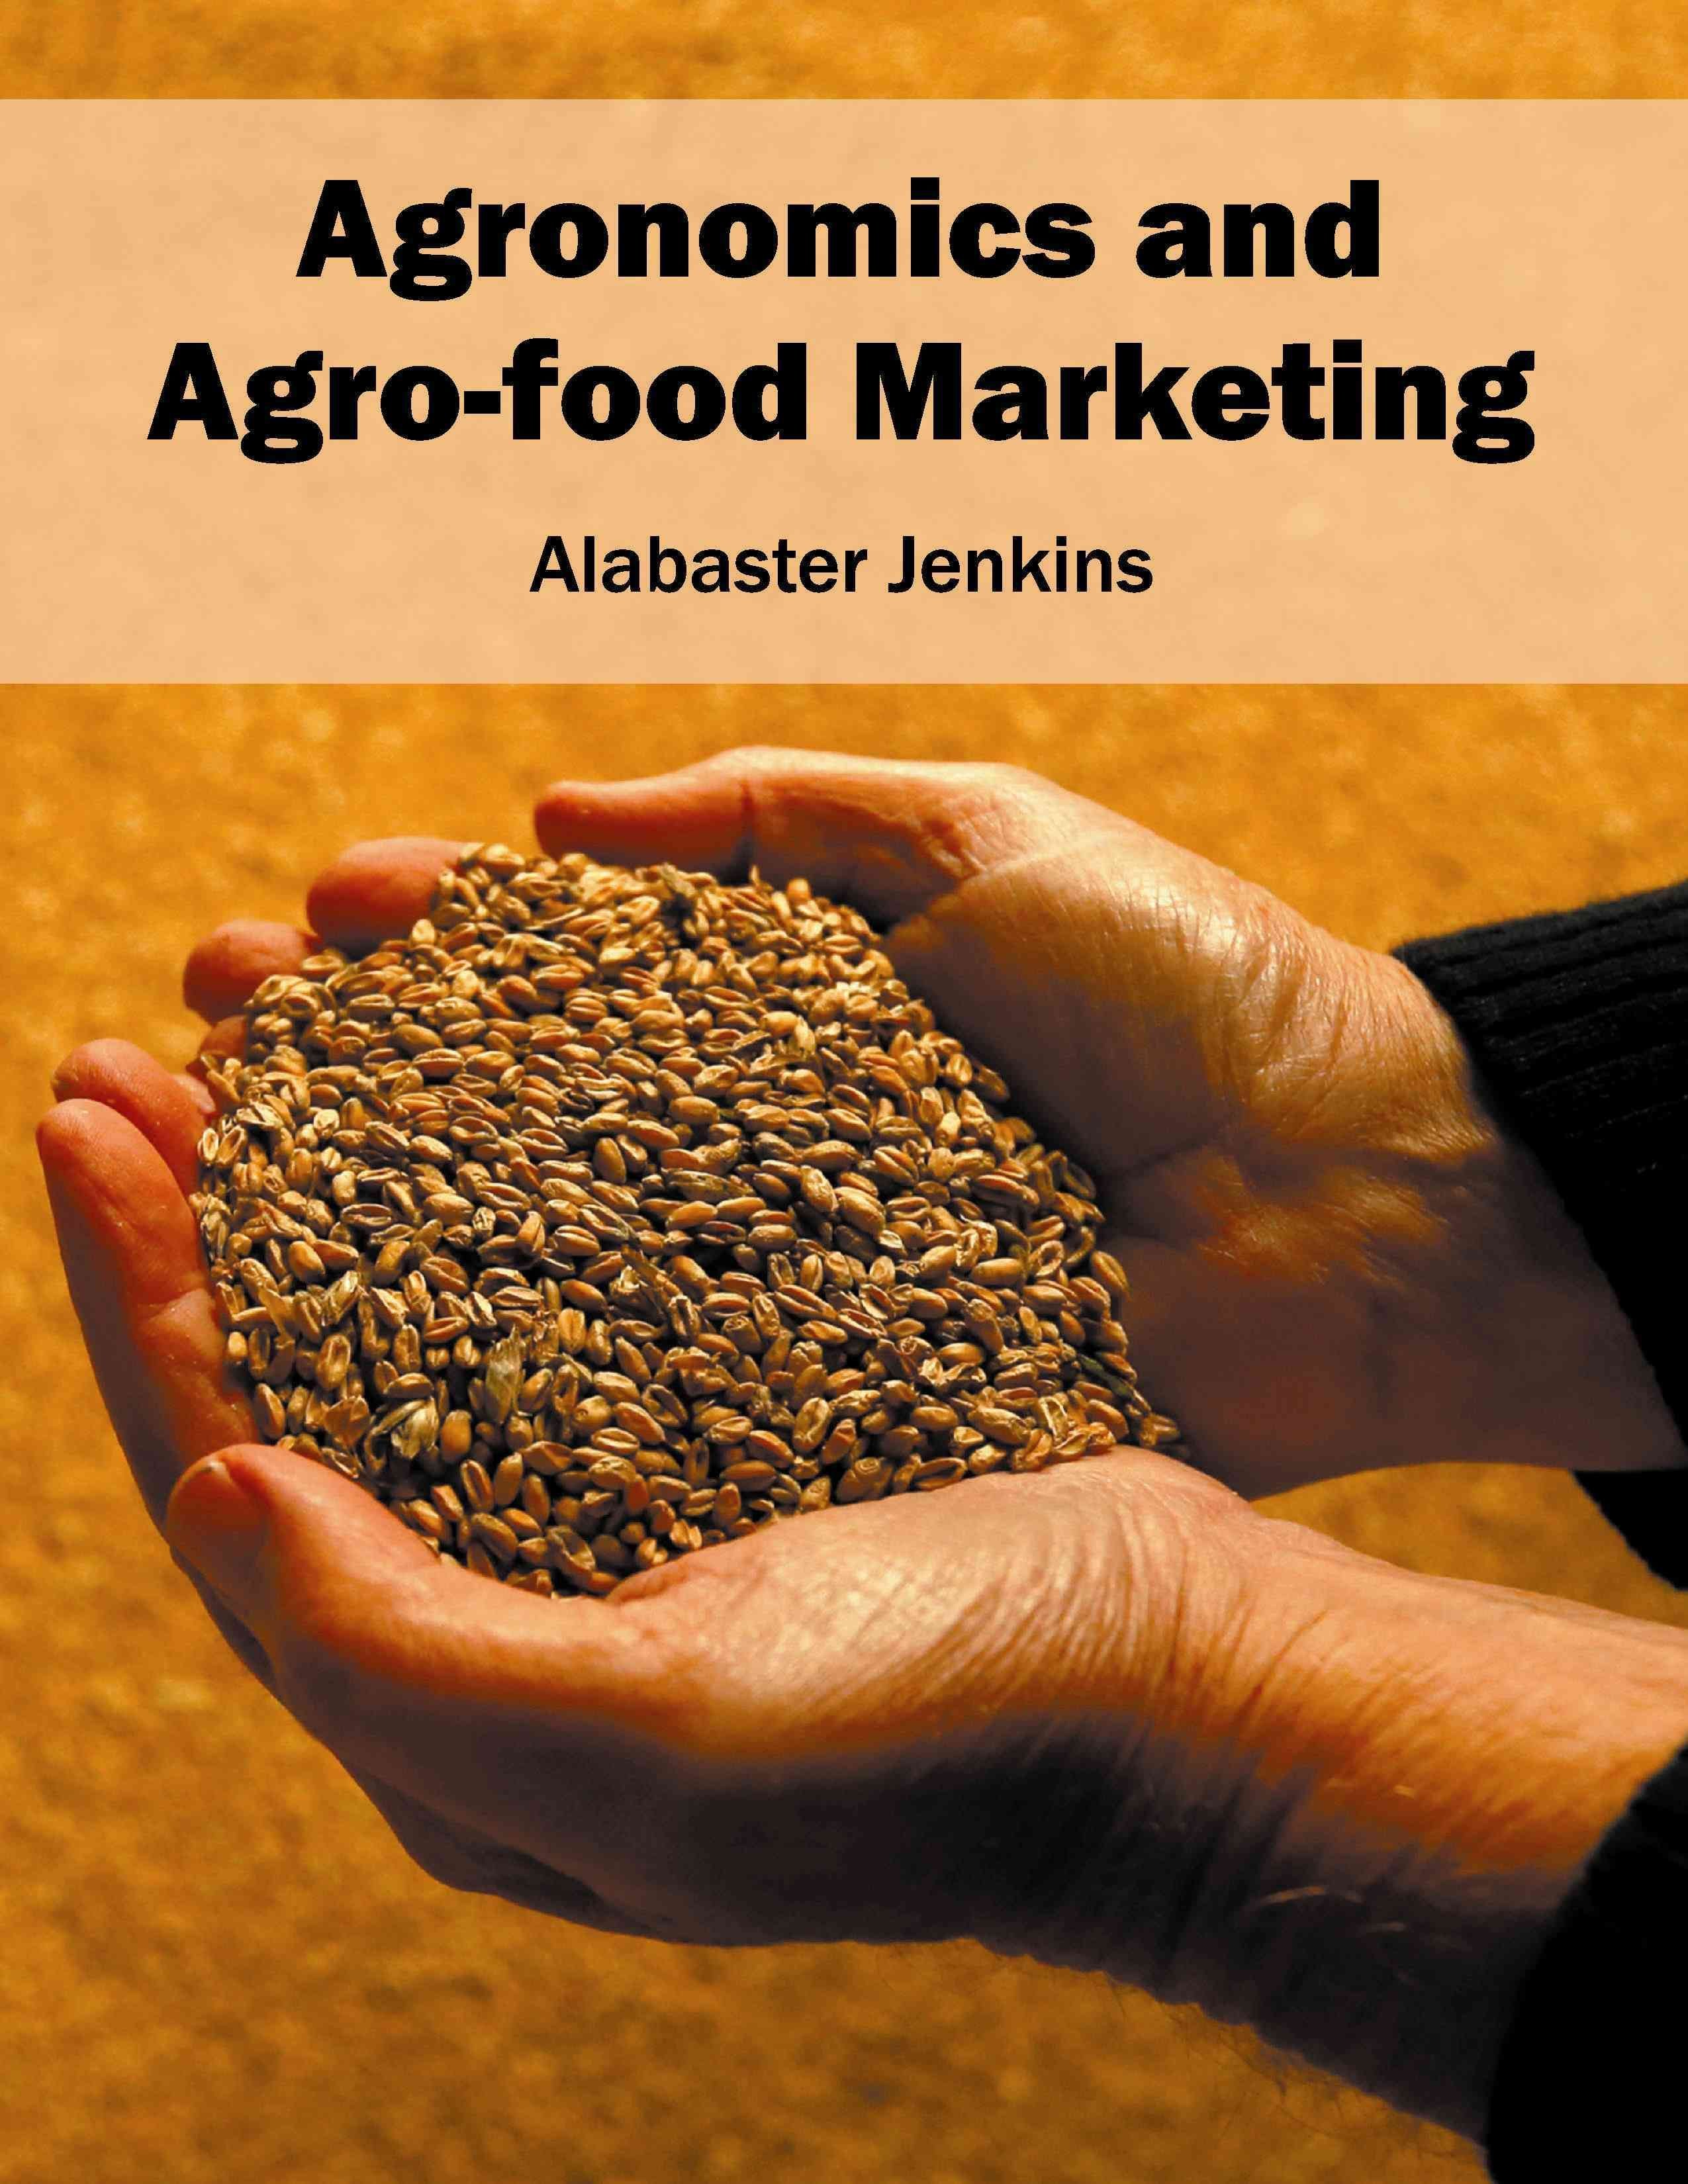 Agronomics and Agro-Food Marketing